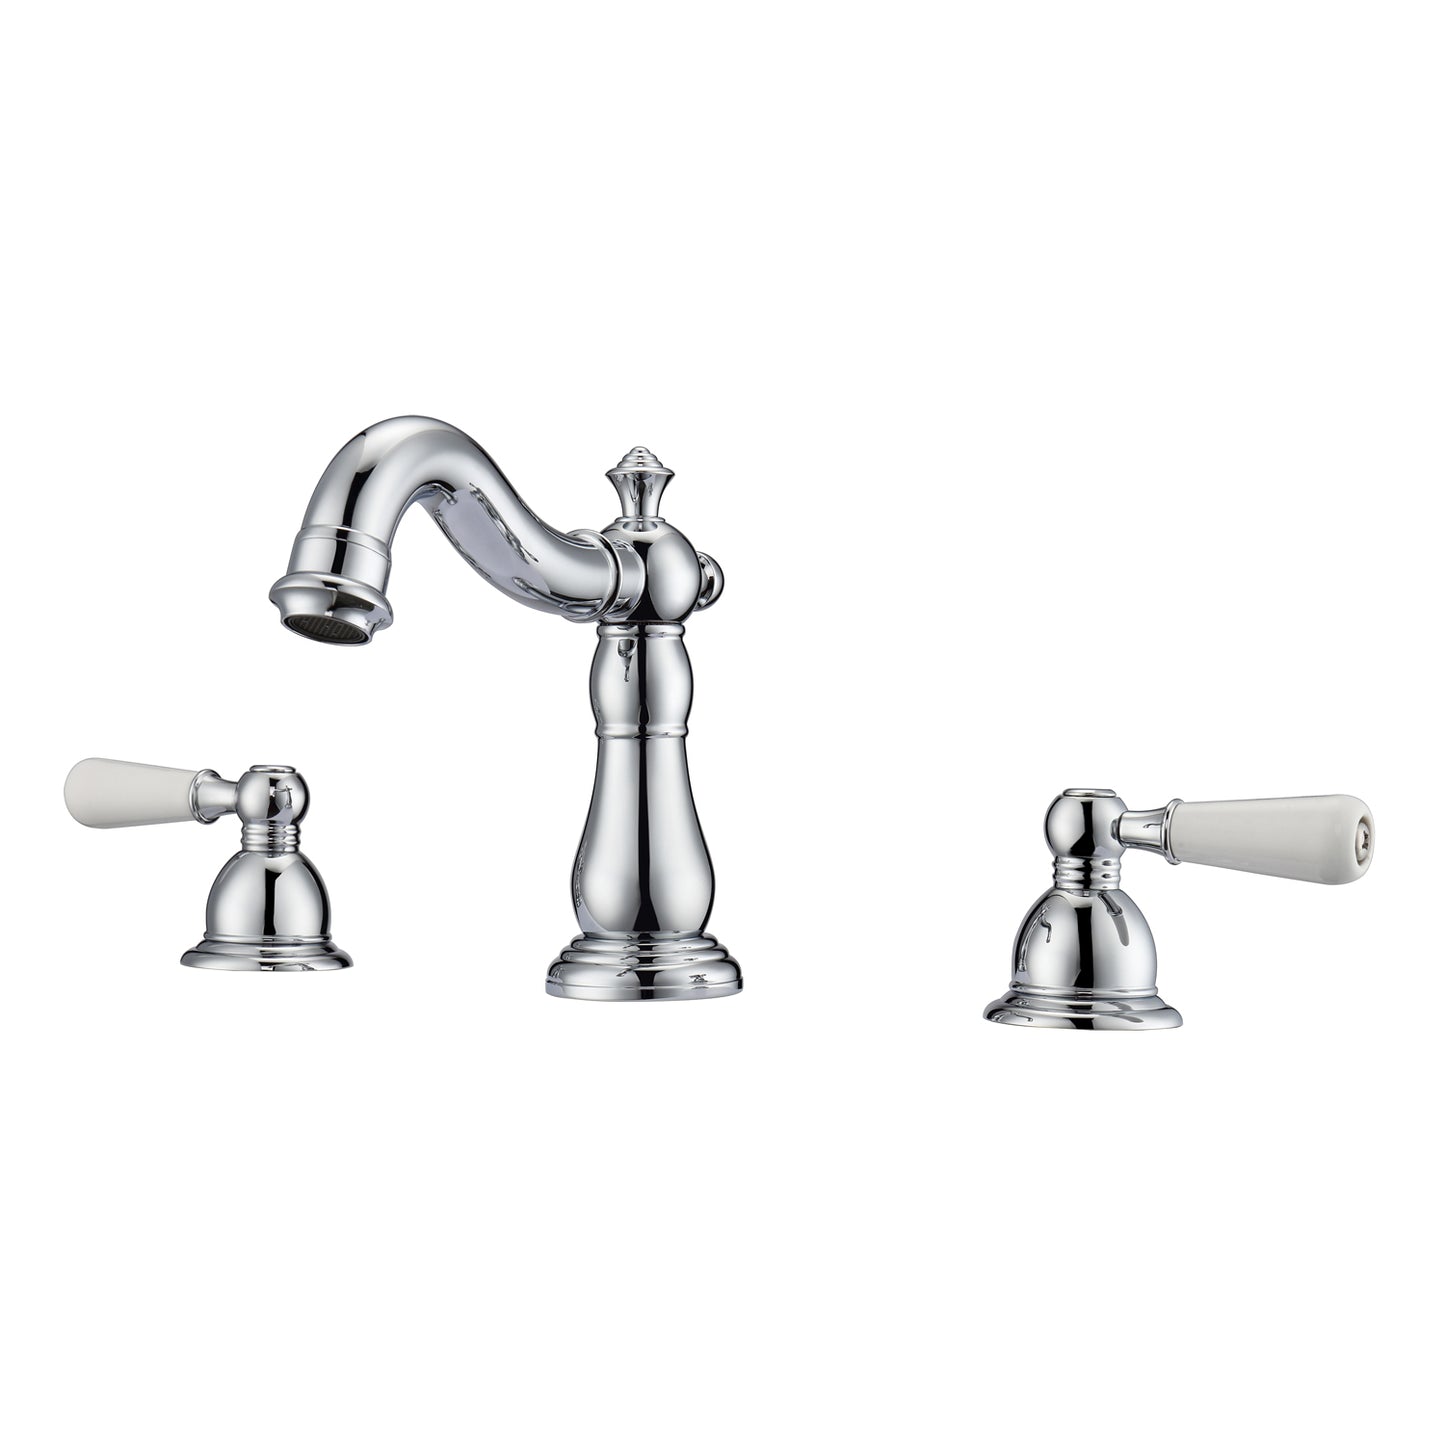 Aldora 8" Widespread Chrome Bathroom Faucet with Porcelain Lever Handles